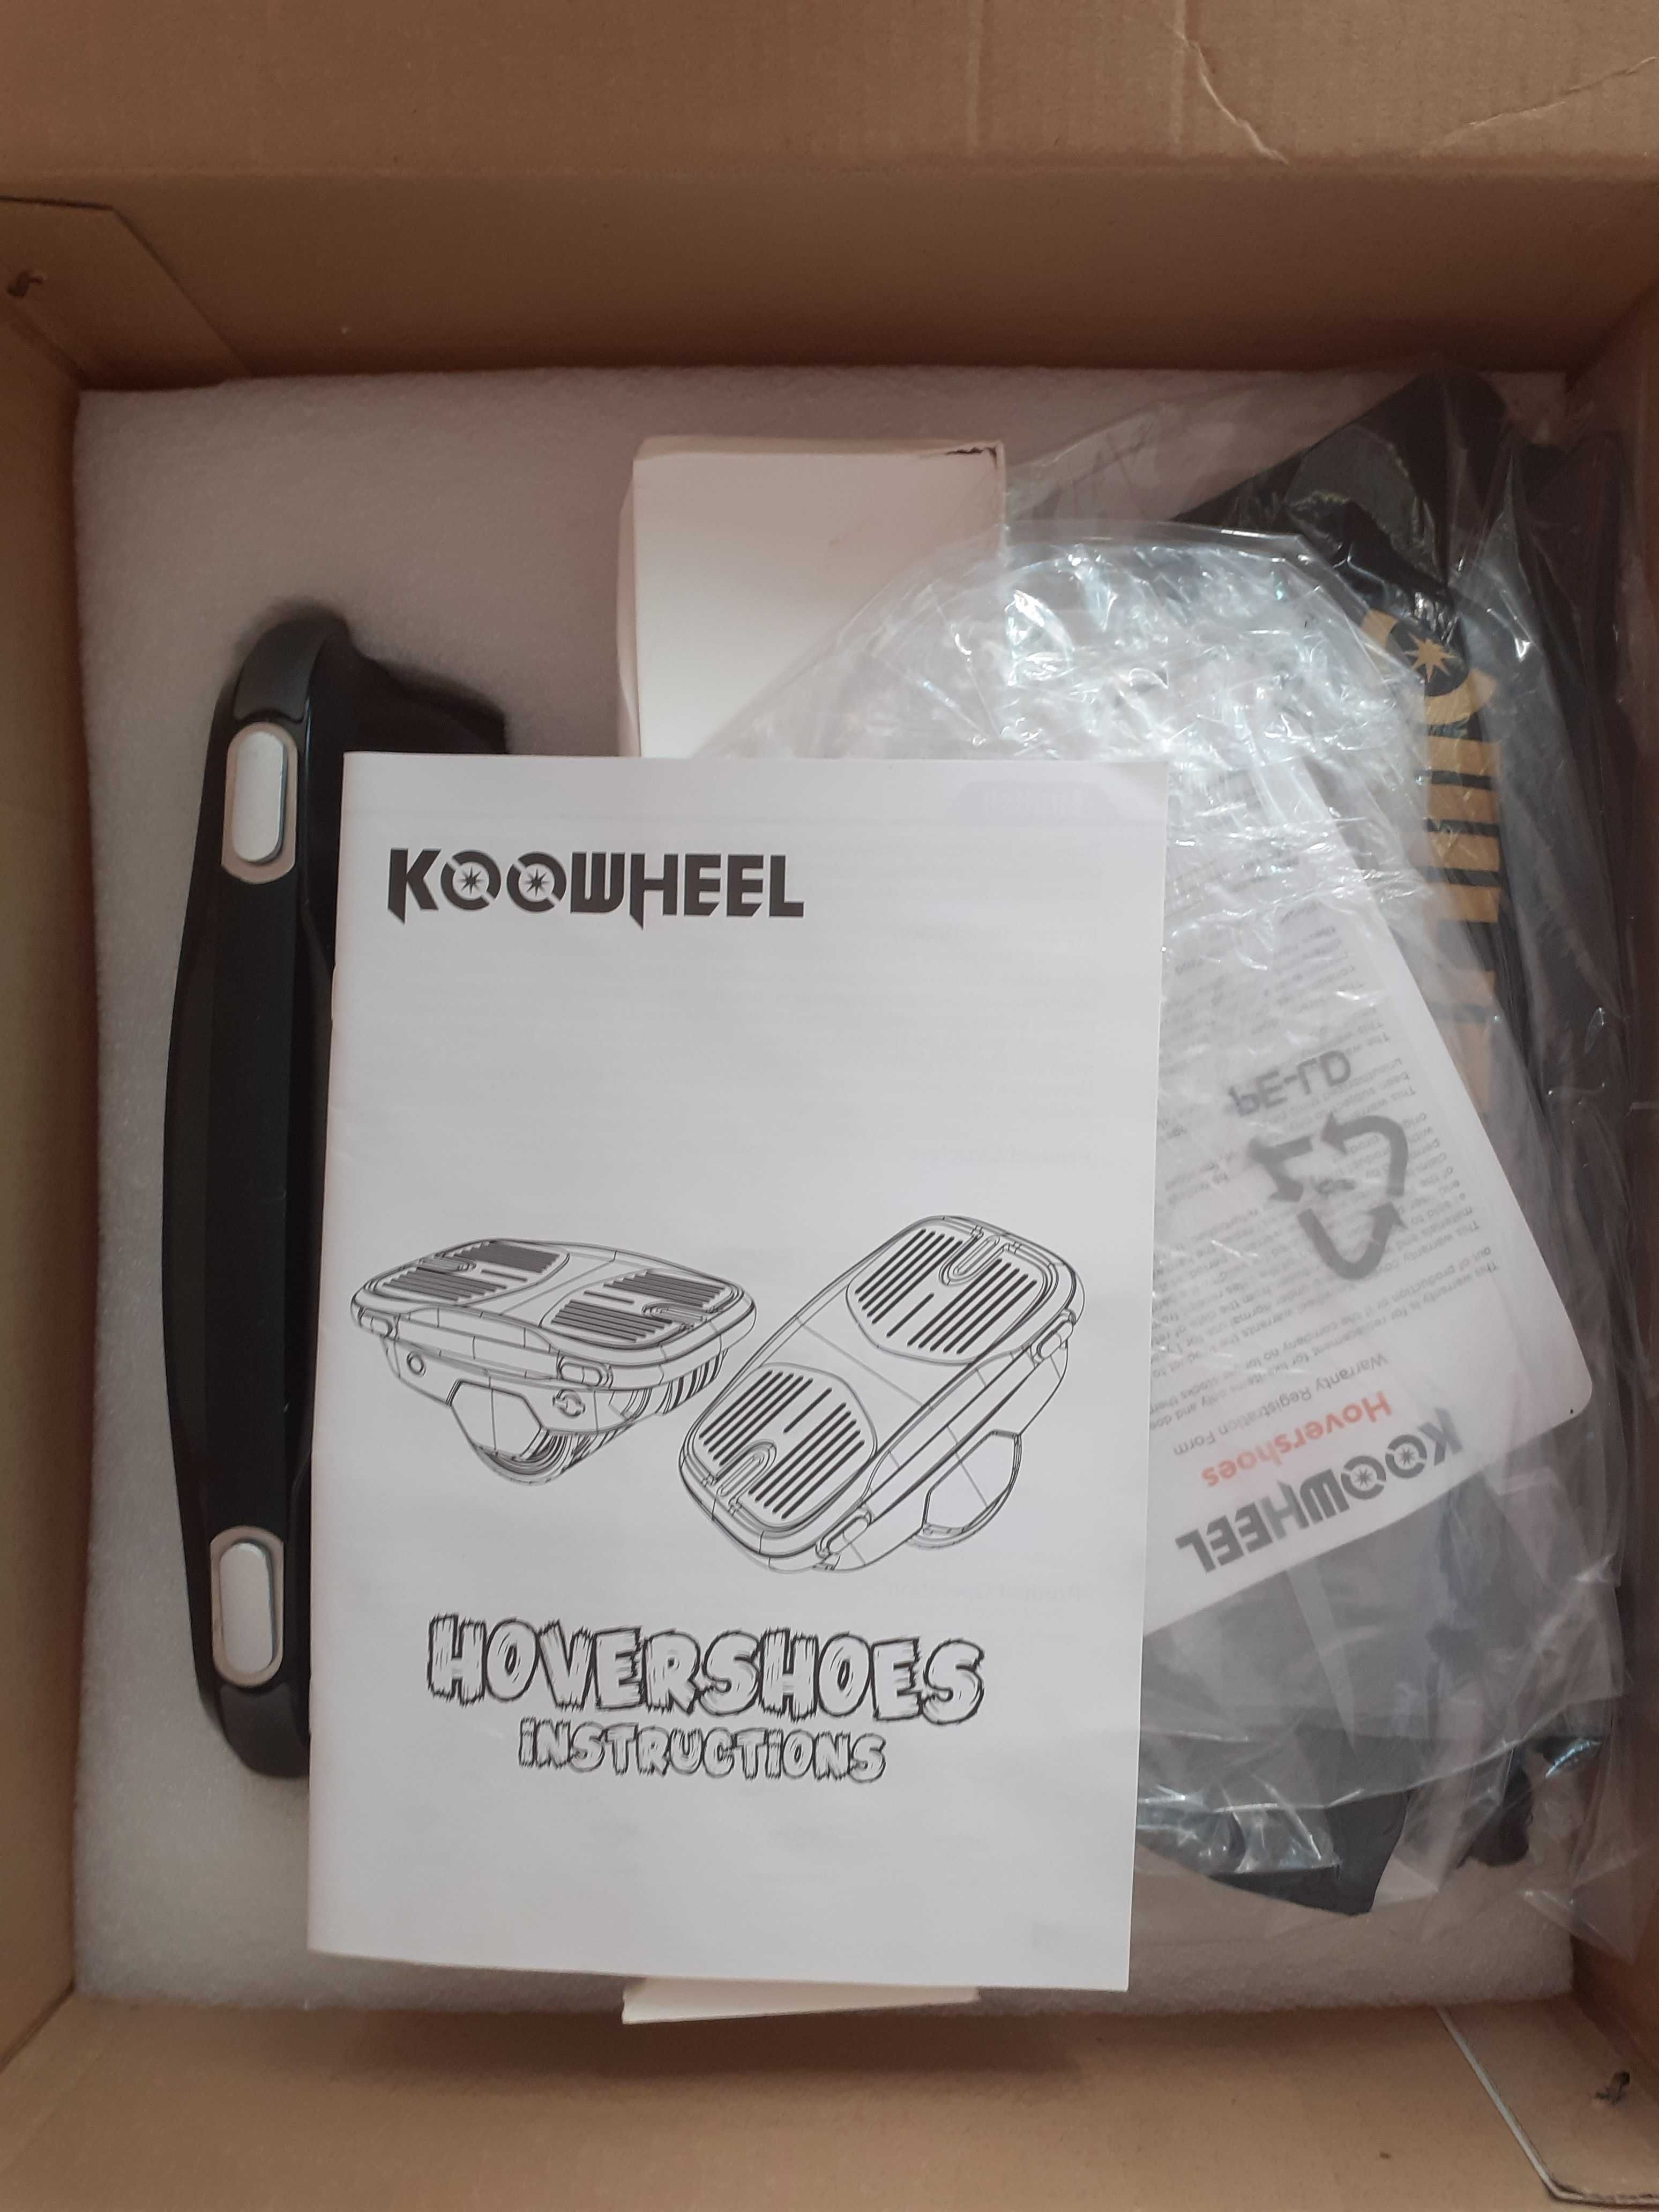 Hover Shoes Koowheel X1 12 Km/h